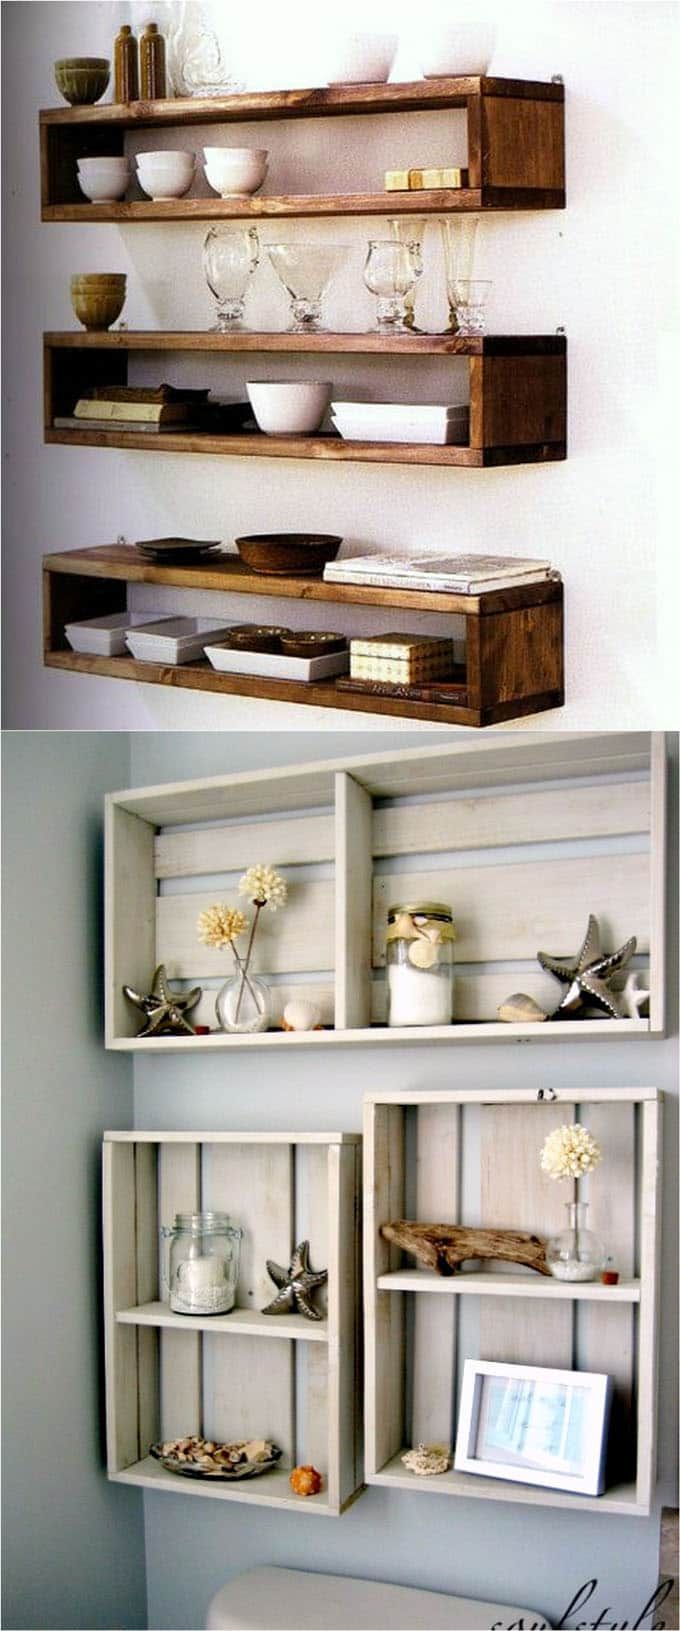 16 Easy and Stylish DIY Floating Shelves & Wall Shelves - 16 Easy and Stylish DIY Floating Shelves & Wall Shelves -   16 diy Wood ideas